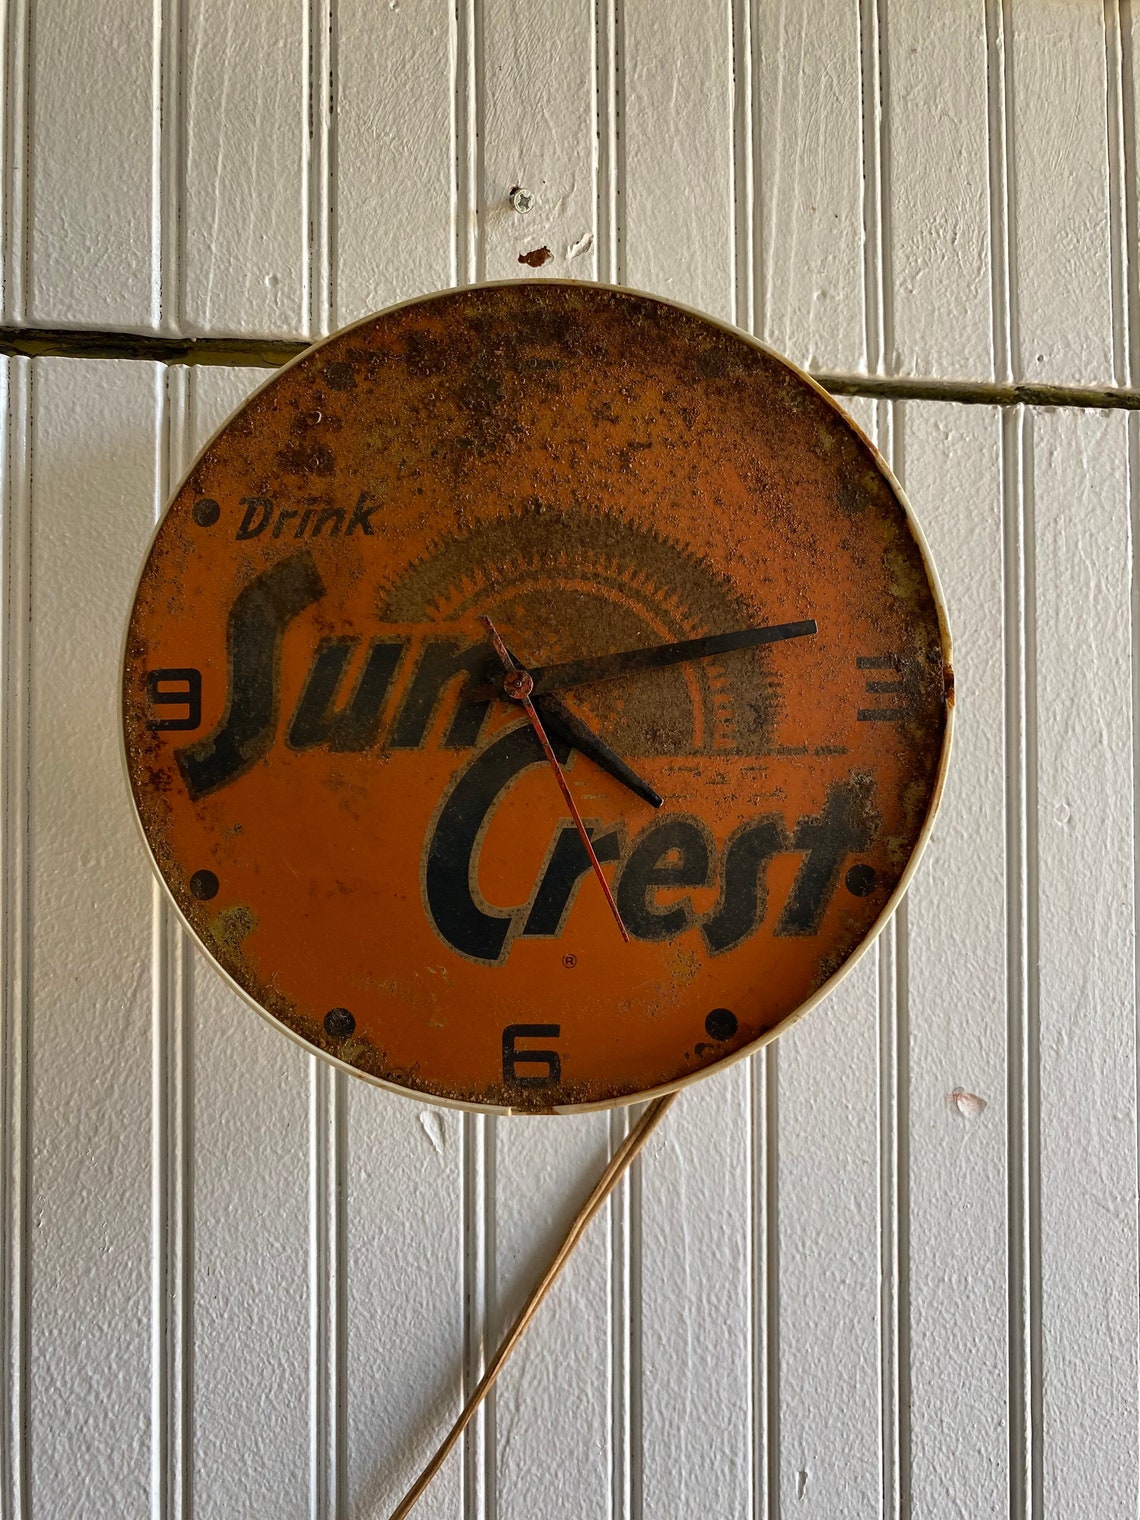 1960s SUNCREST Orange Soda Advertising Clock Country Kitchen | Etsy 1960s Soda Advertising